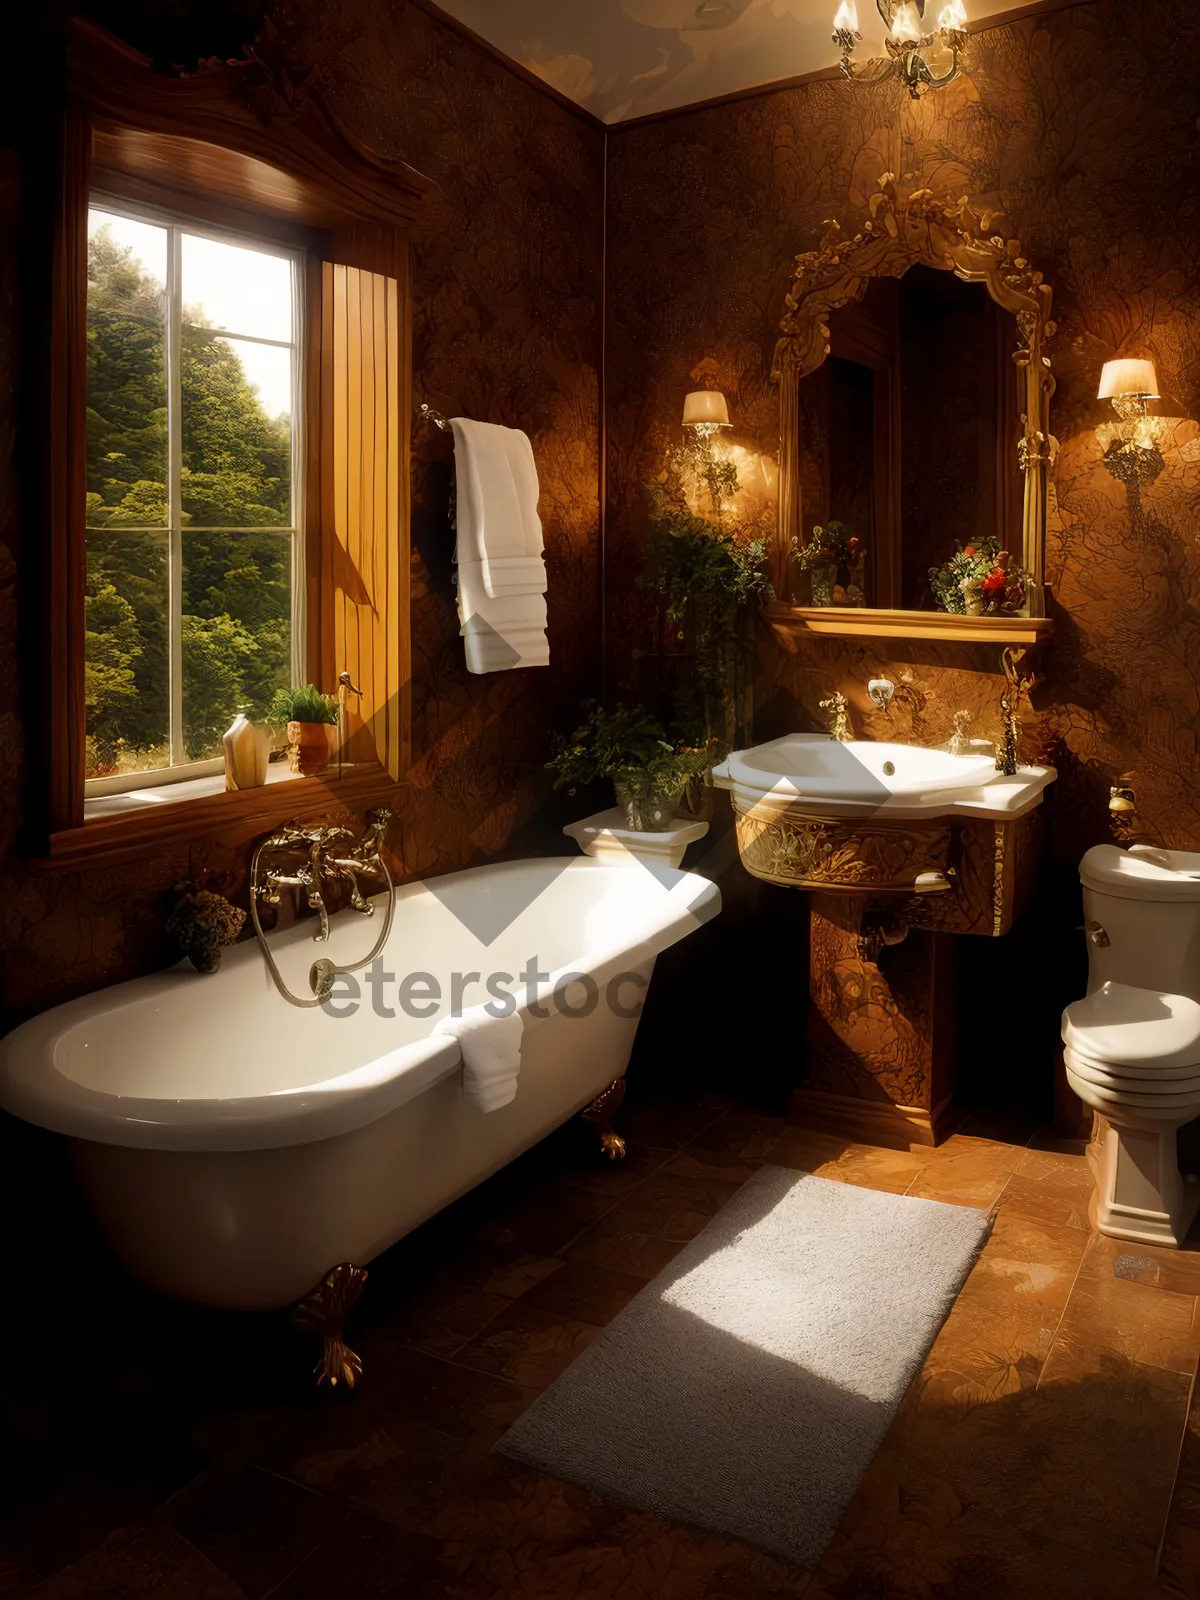 Picture of Modern luxury bathroom with sleek design